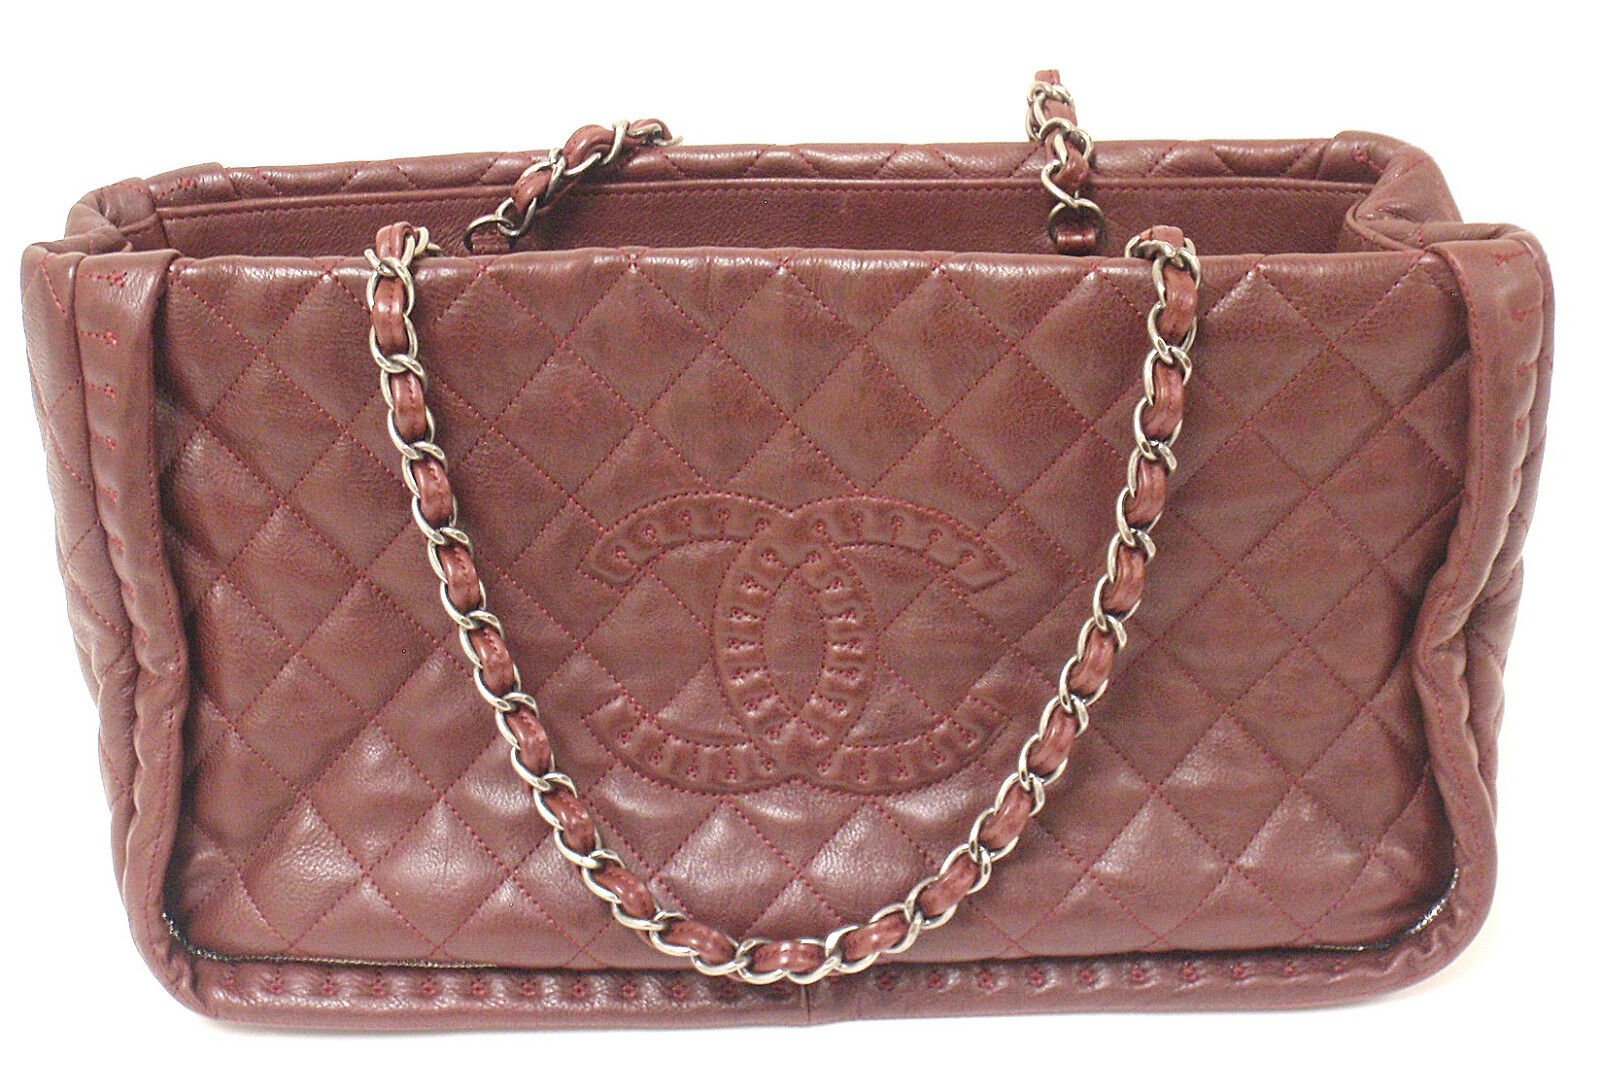 Authentic 2012 Chanel Istanbul Soft Caviar Tote Burgundy Leather Handbag